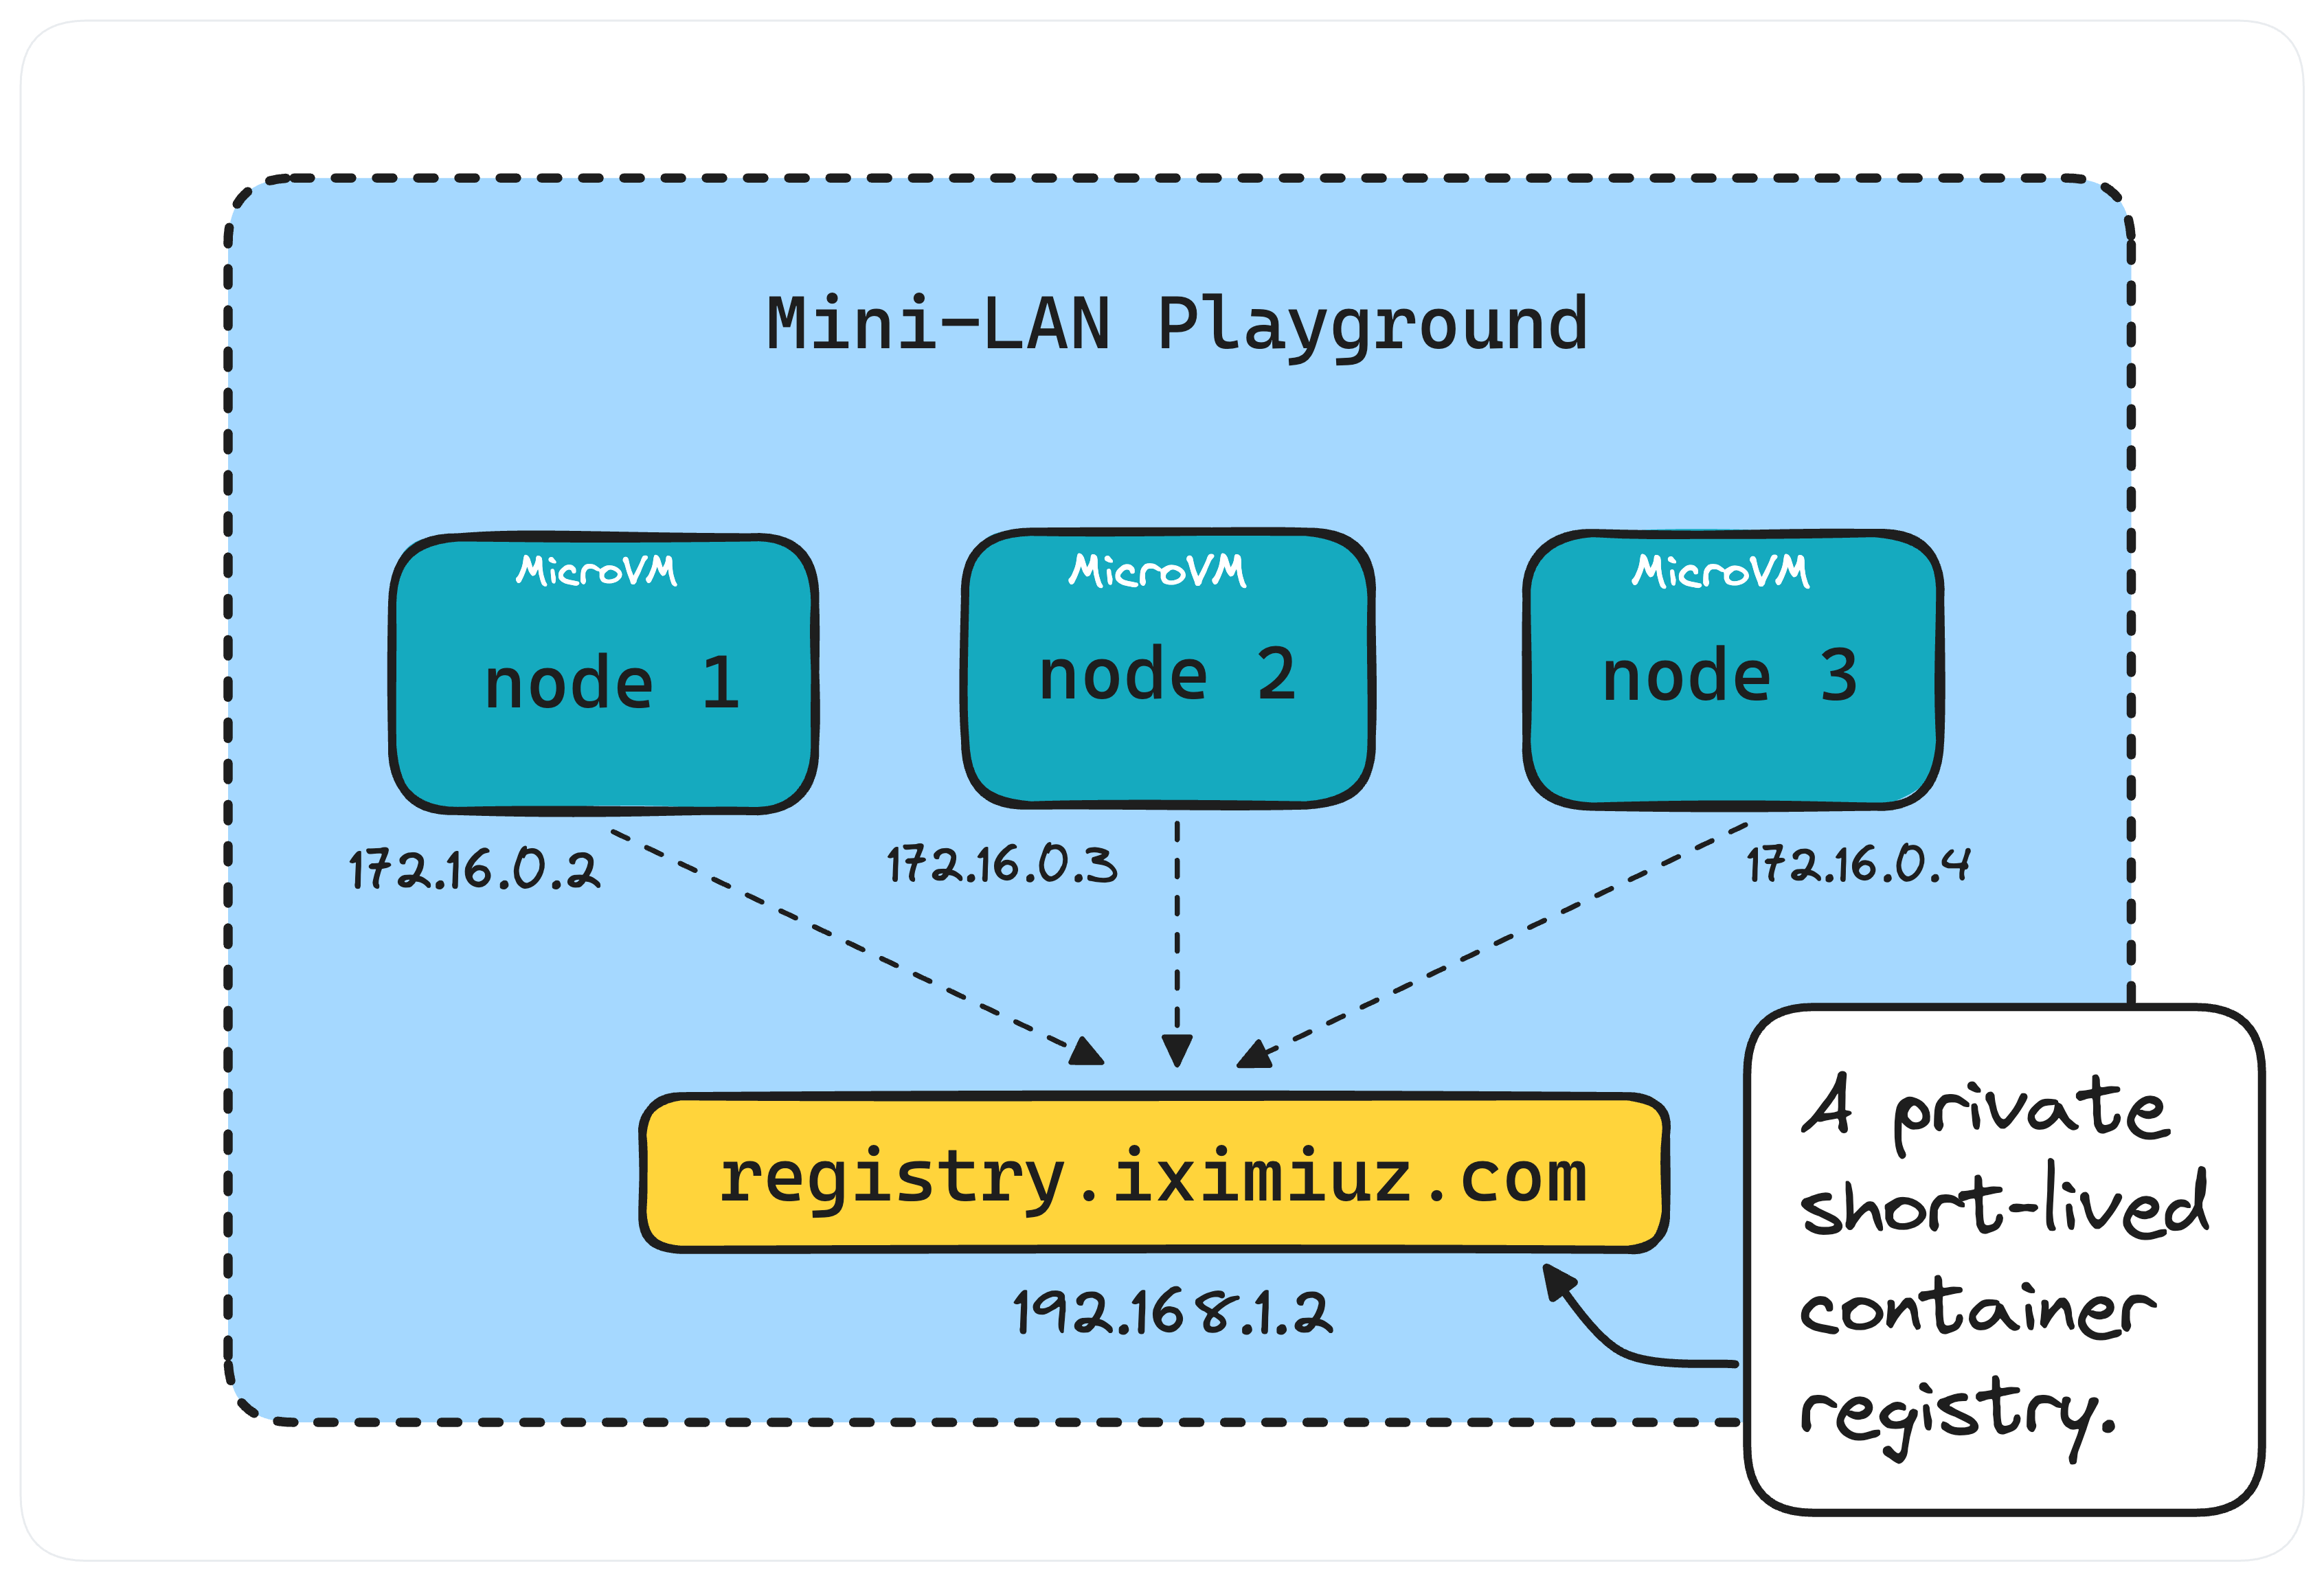 Mini-LAN (Ubuntu, Docker) playground: Three Ubuntu servers with Docker pre-installed connected into a single network.